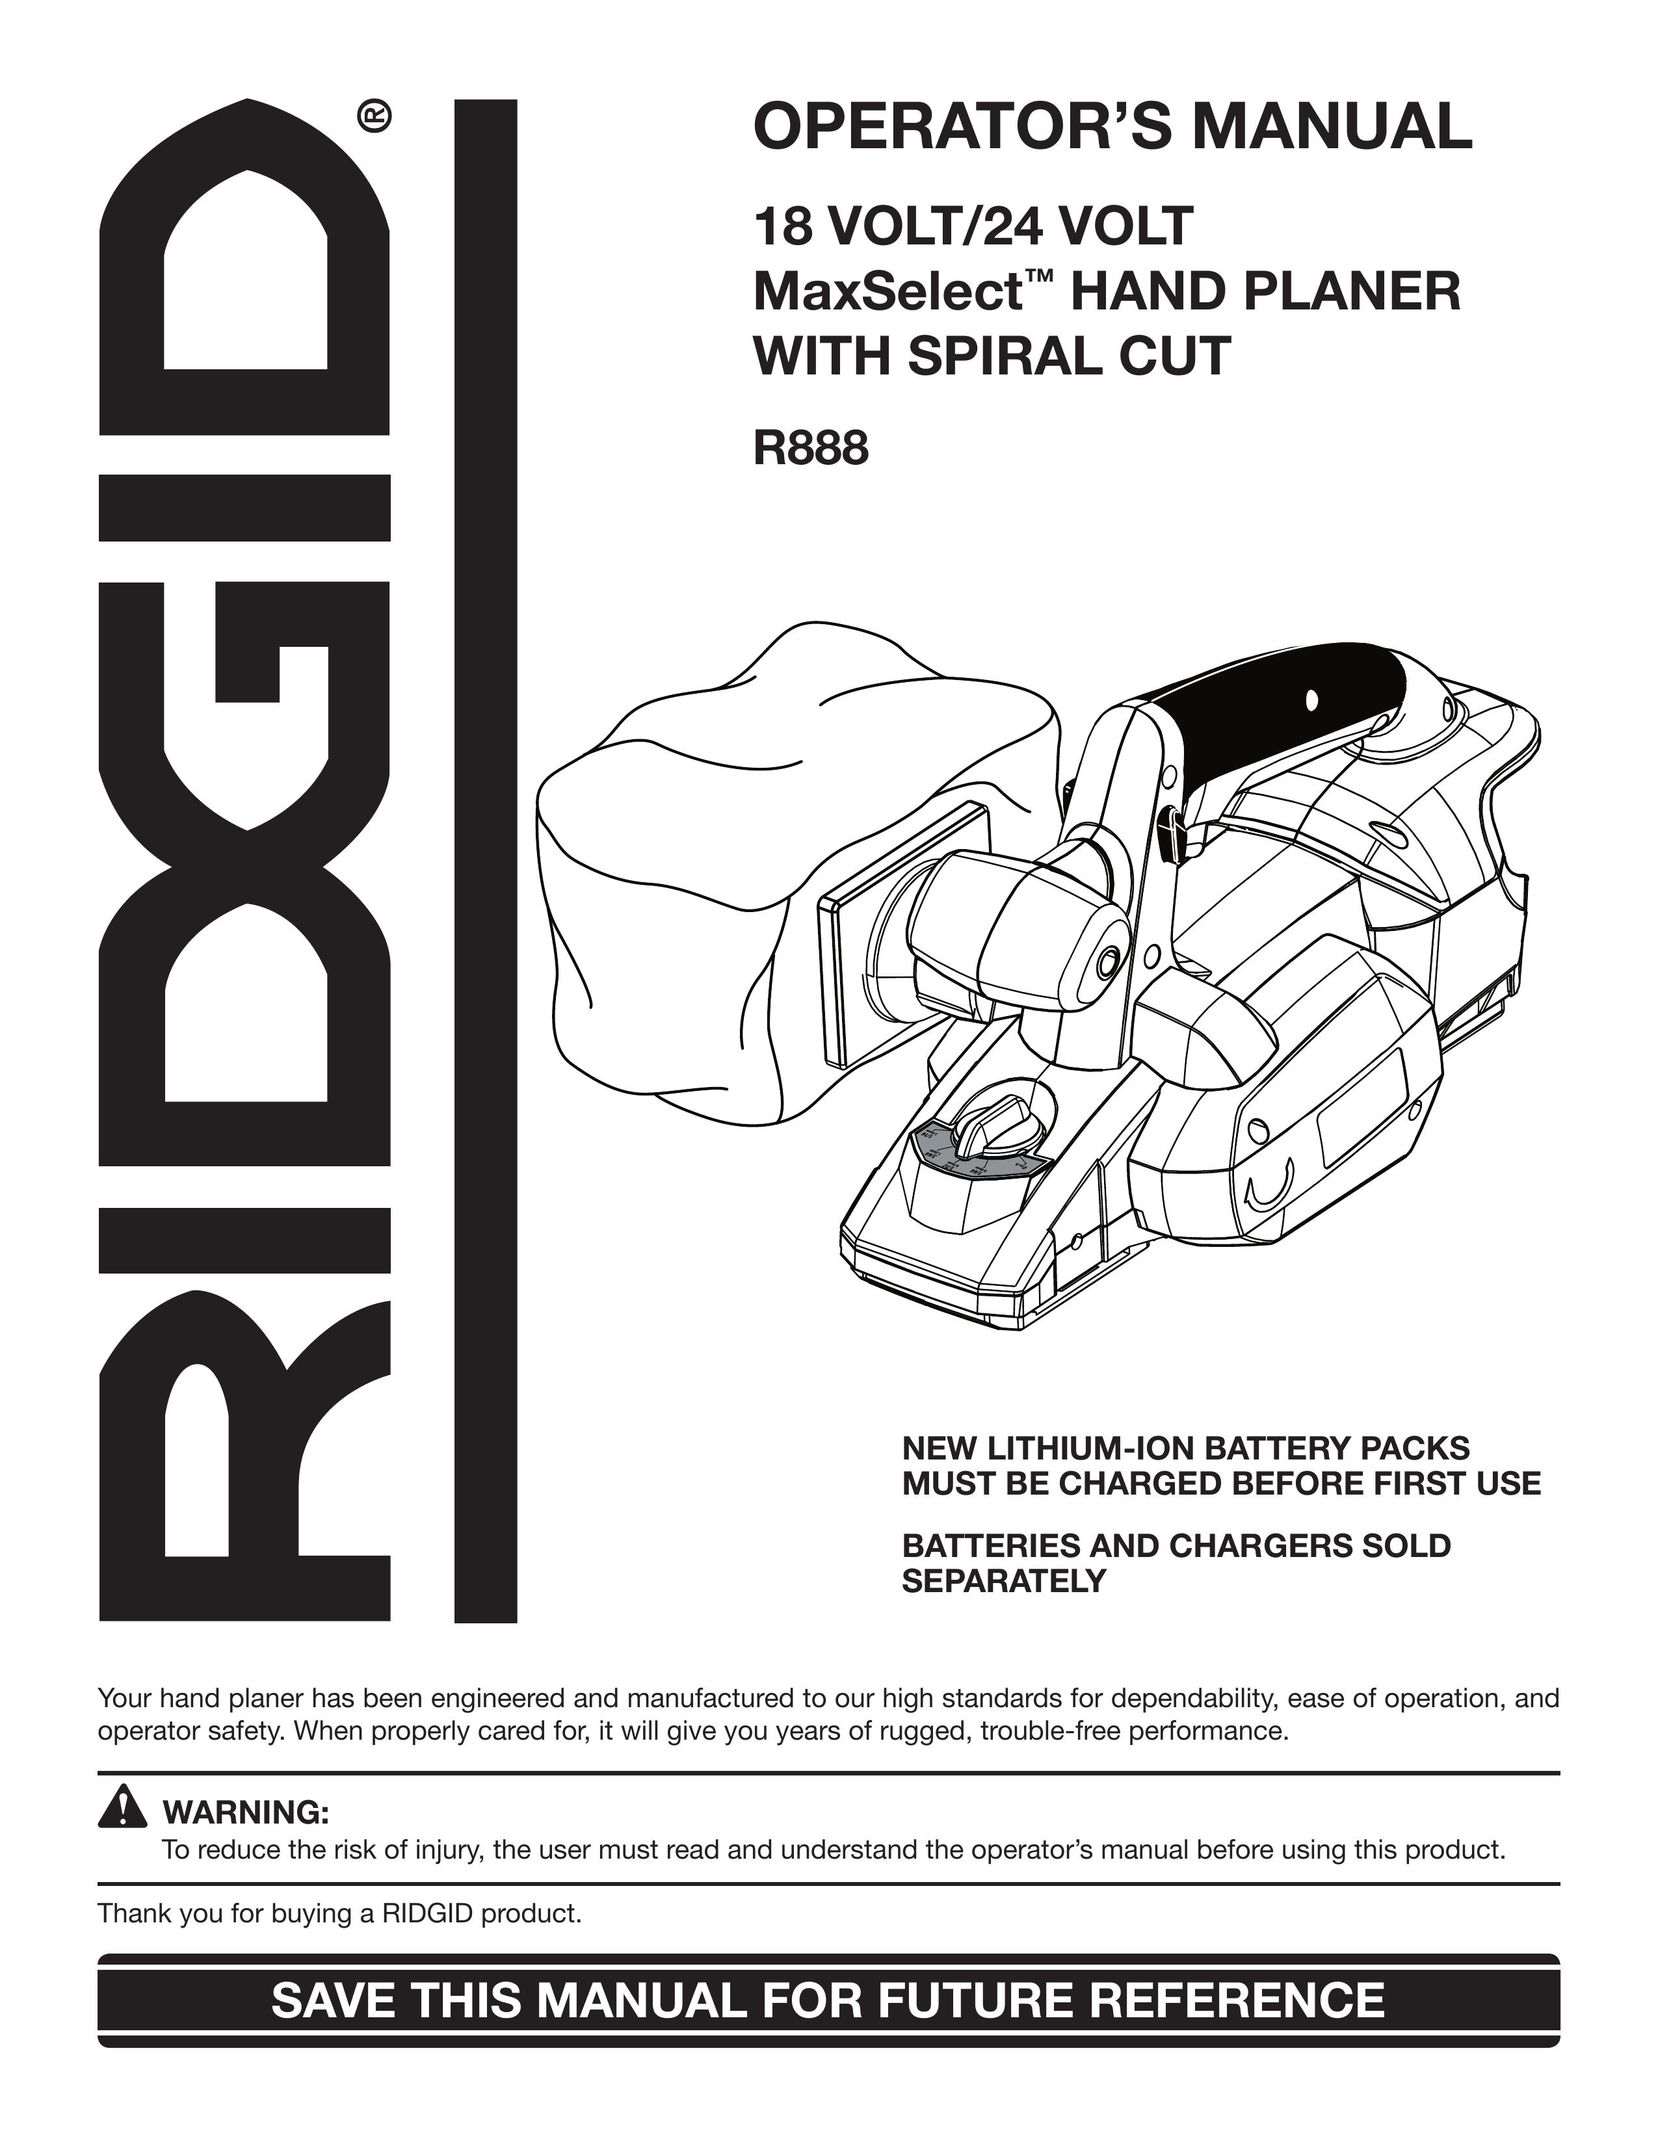 RIDGID R888 Planer User Manual